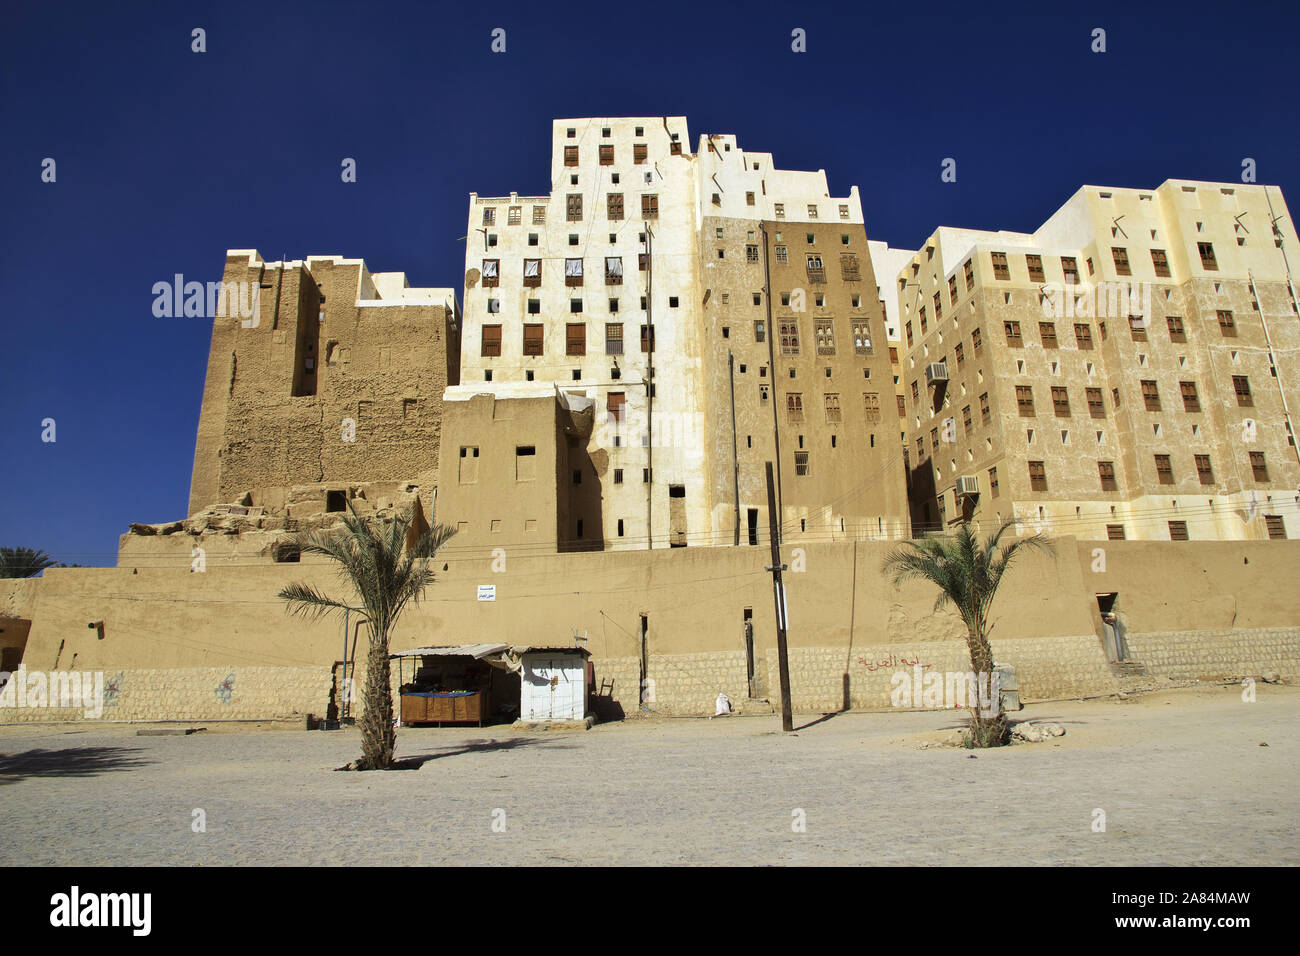 The city of medieval skyscrapers, Shibam, Wadi Hadramaut, Yemen Stock Photo